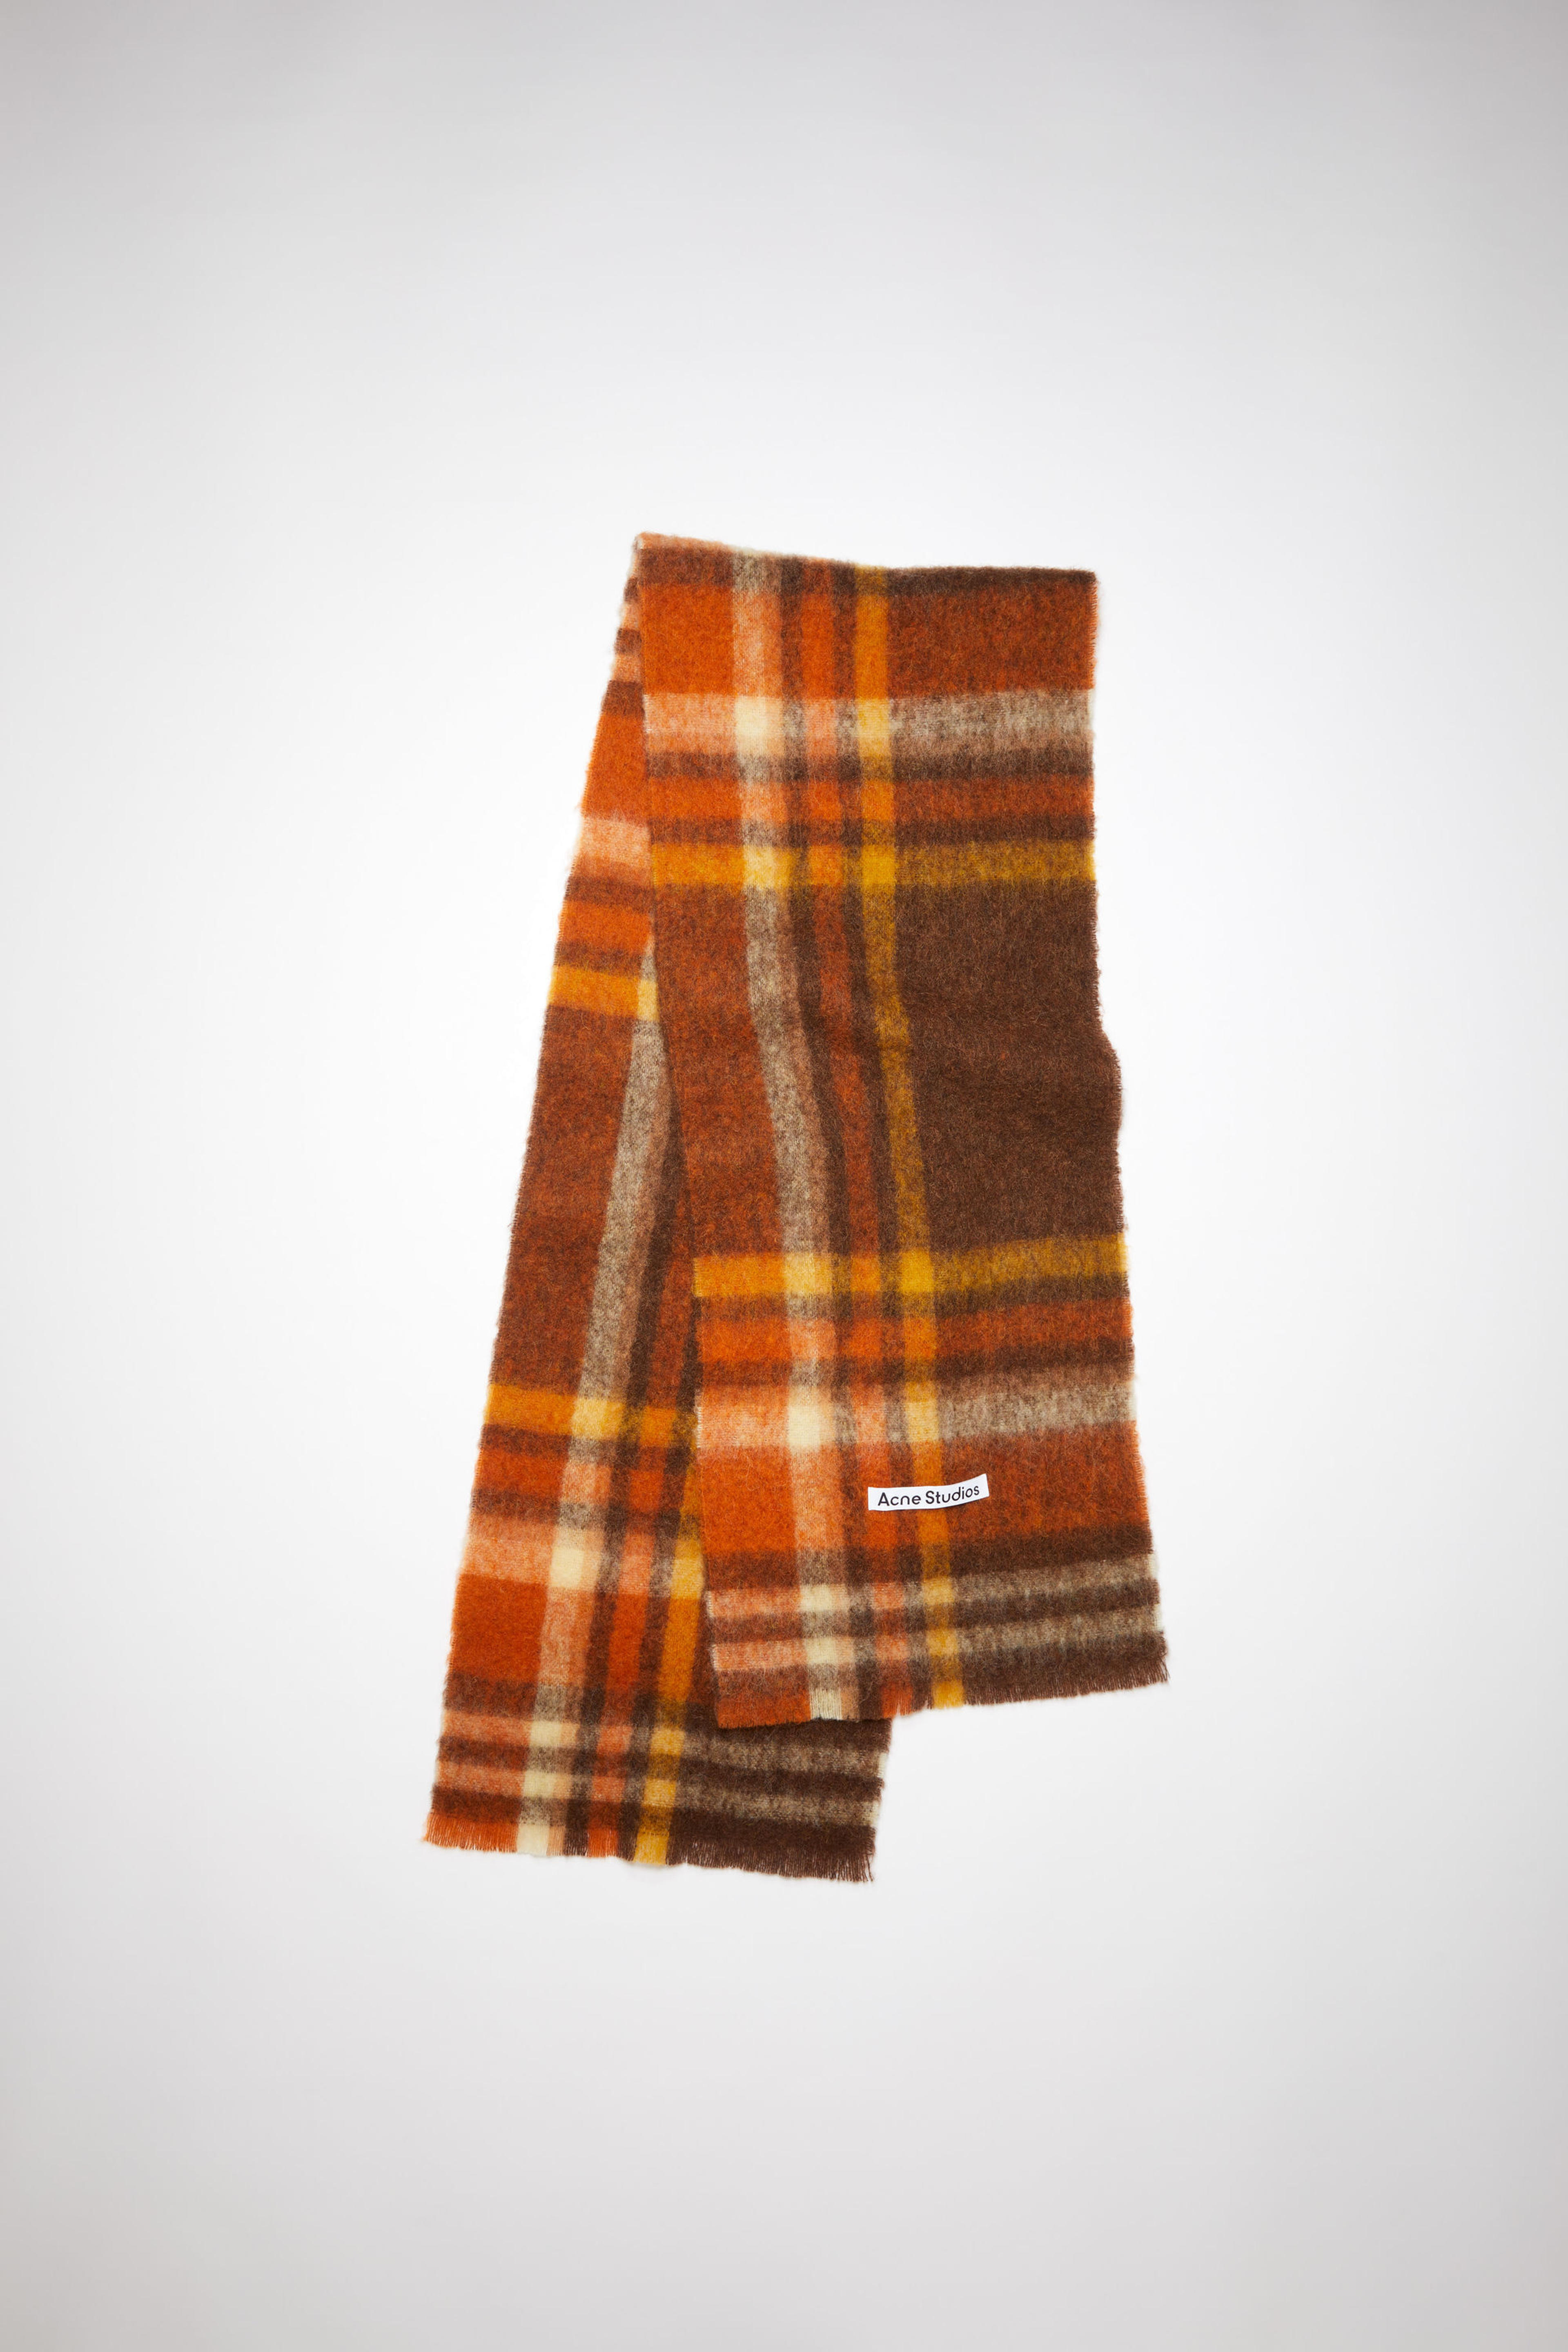 Acne Studios - Heavy plaid scarf - Brown/orange